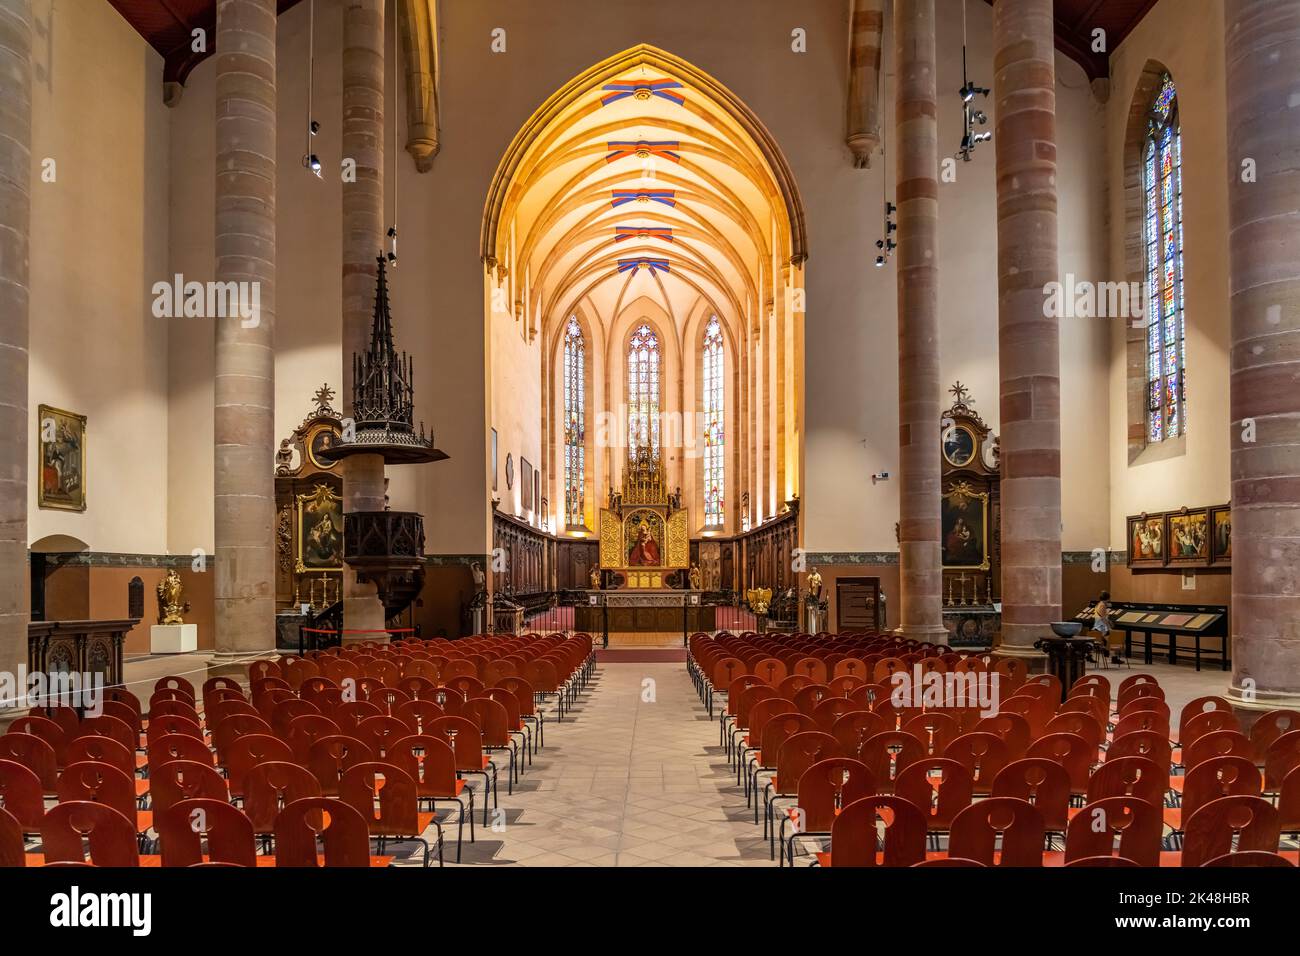 Innenraum der Dominikanerkirche in Colmar, Elsass, Frankreich  |  The Dominican Church interior in Colmar, Alsace, France Stock Photo